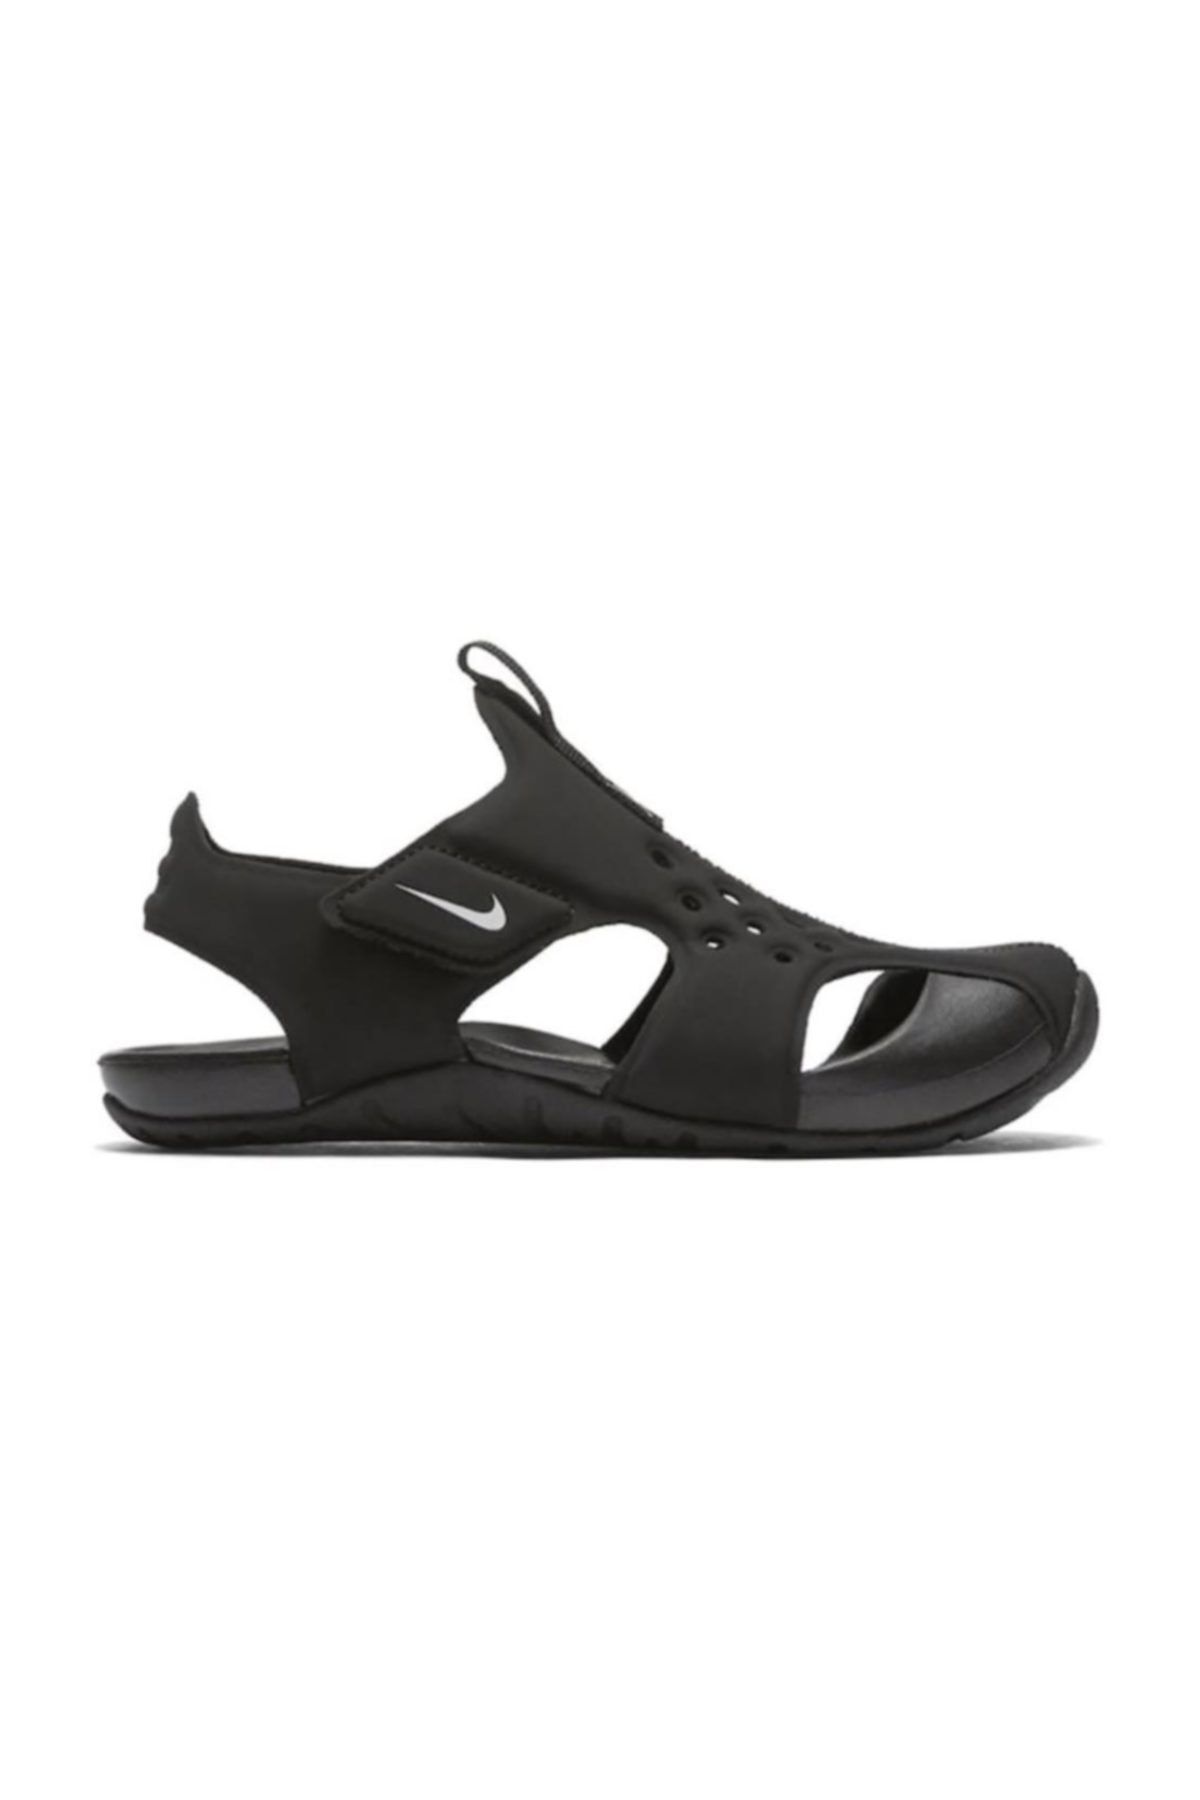 Nike Sunray Protect 2 Siyah Yürüyüş Sandalet 943827 001